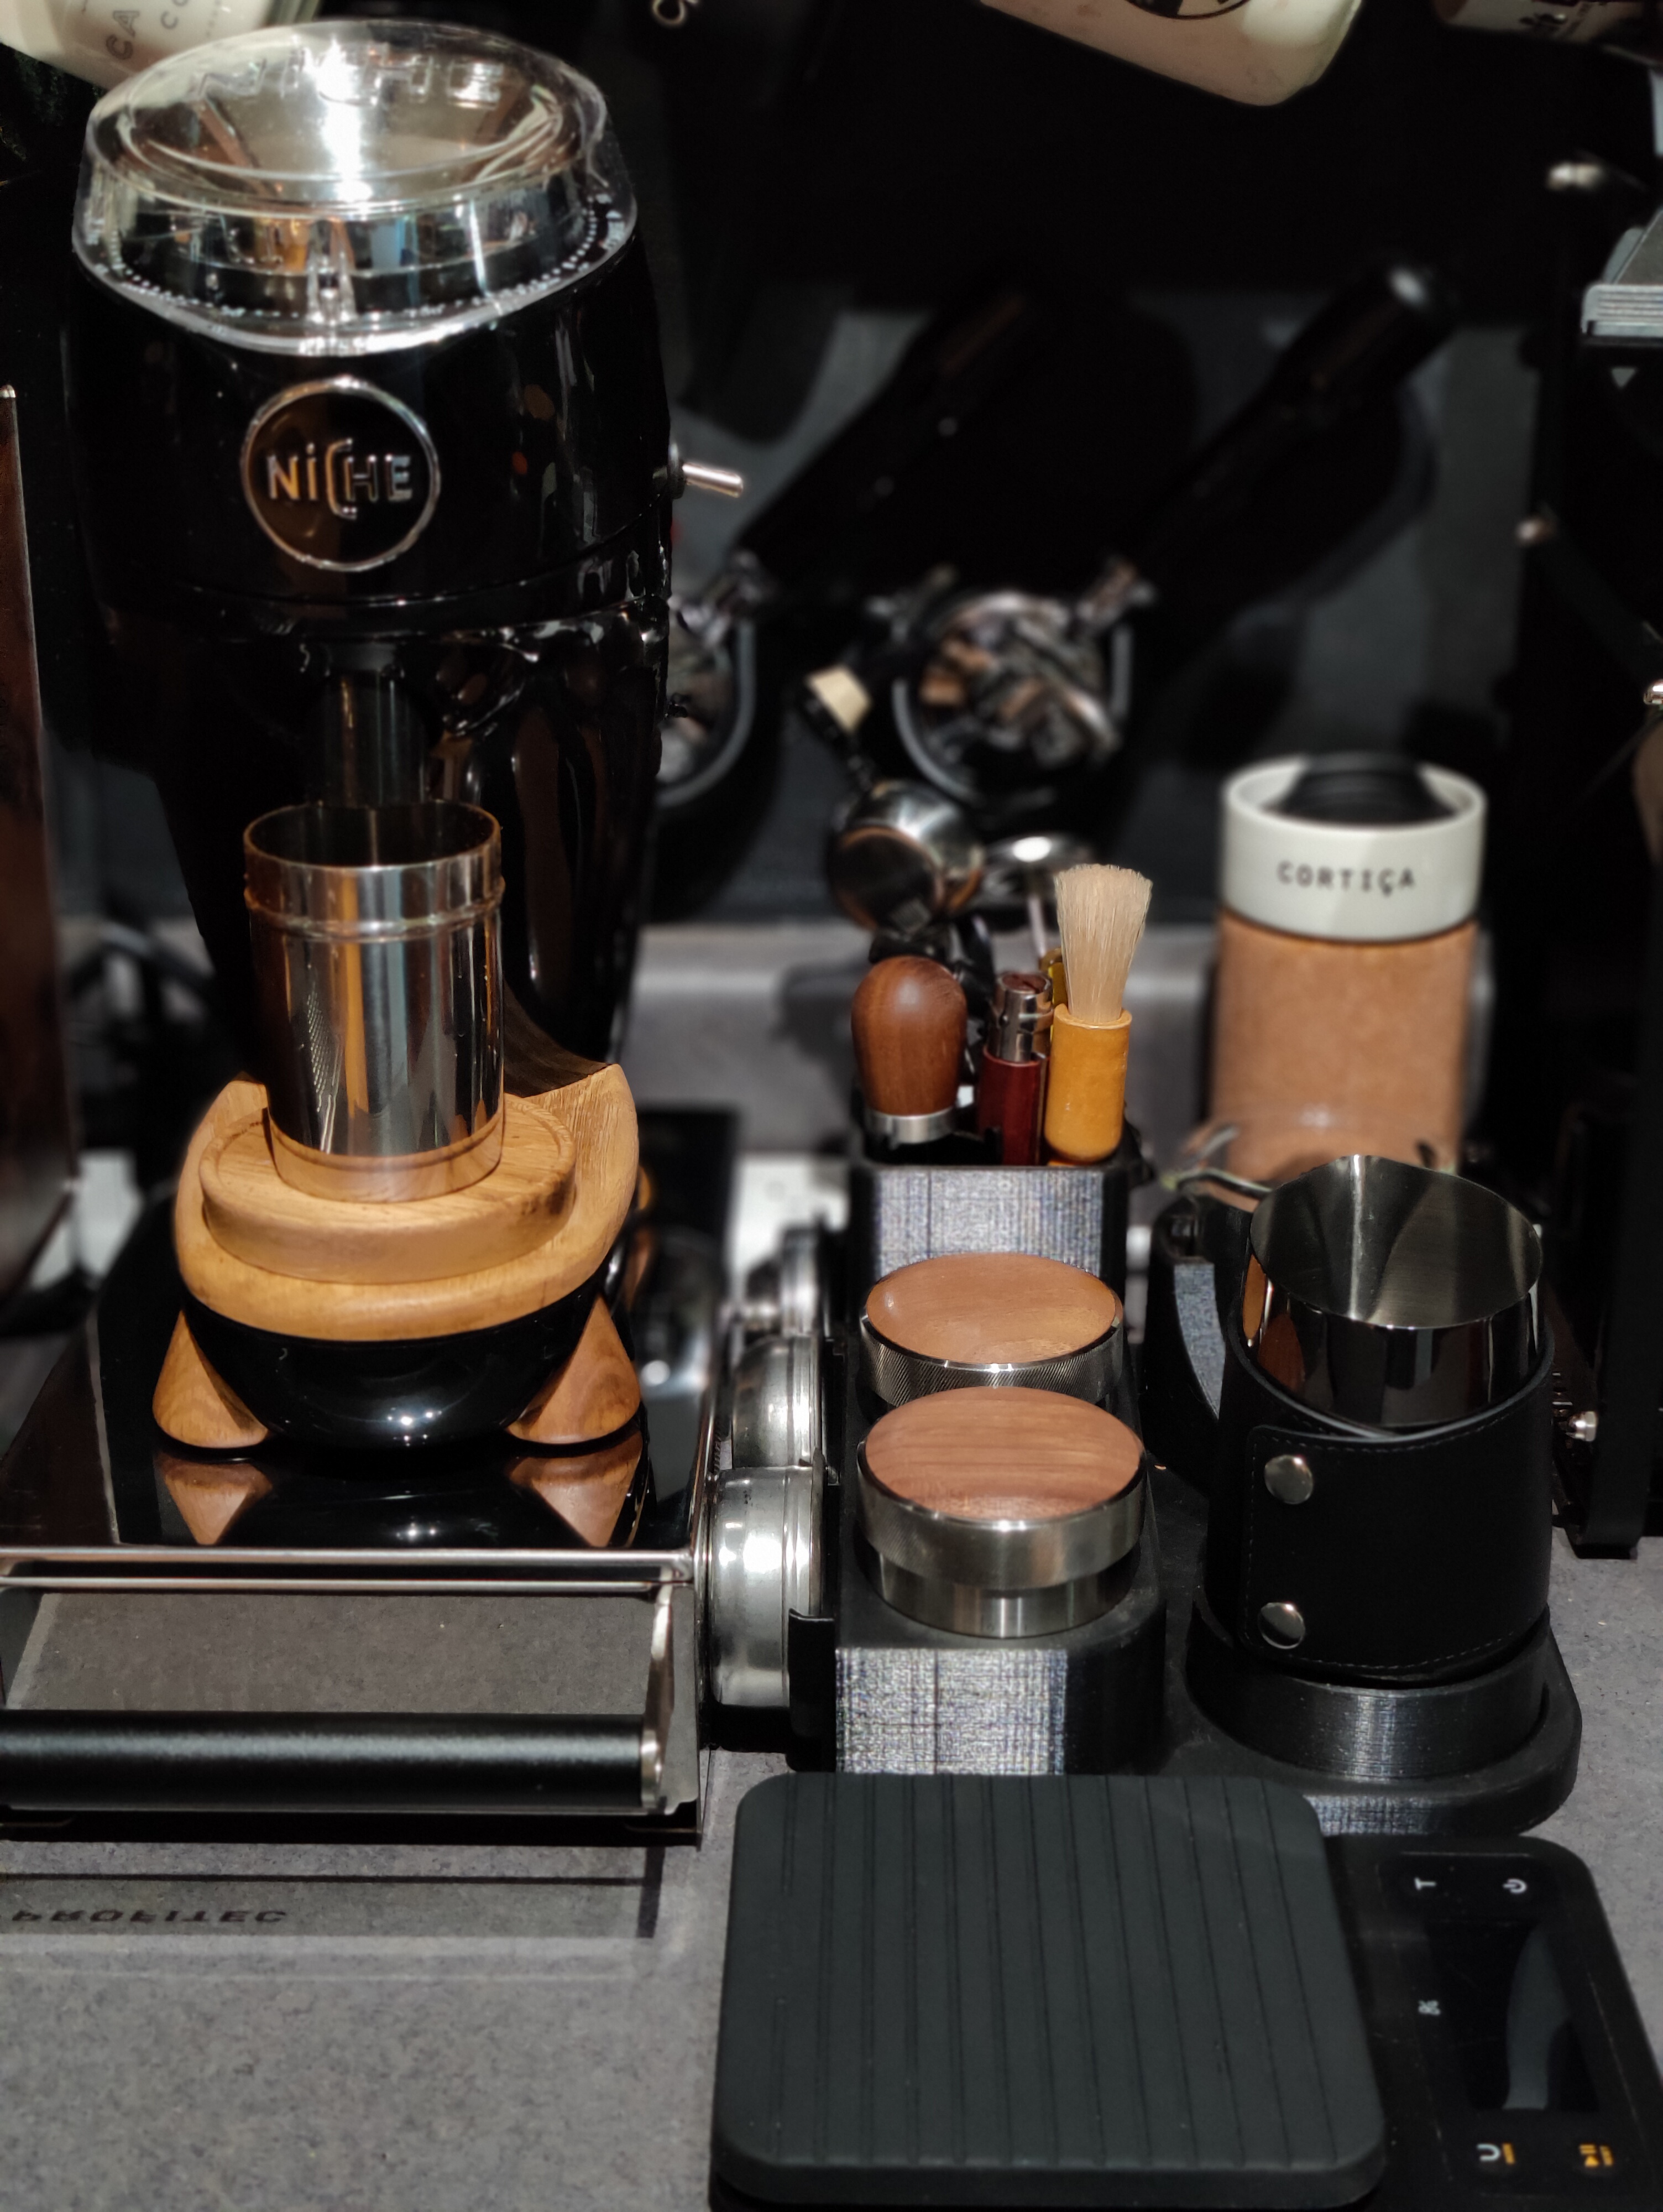 Accessory Kit for 58mm E61 Group Espresso Machines